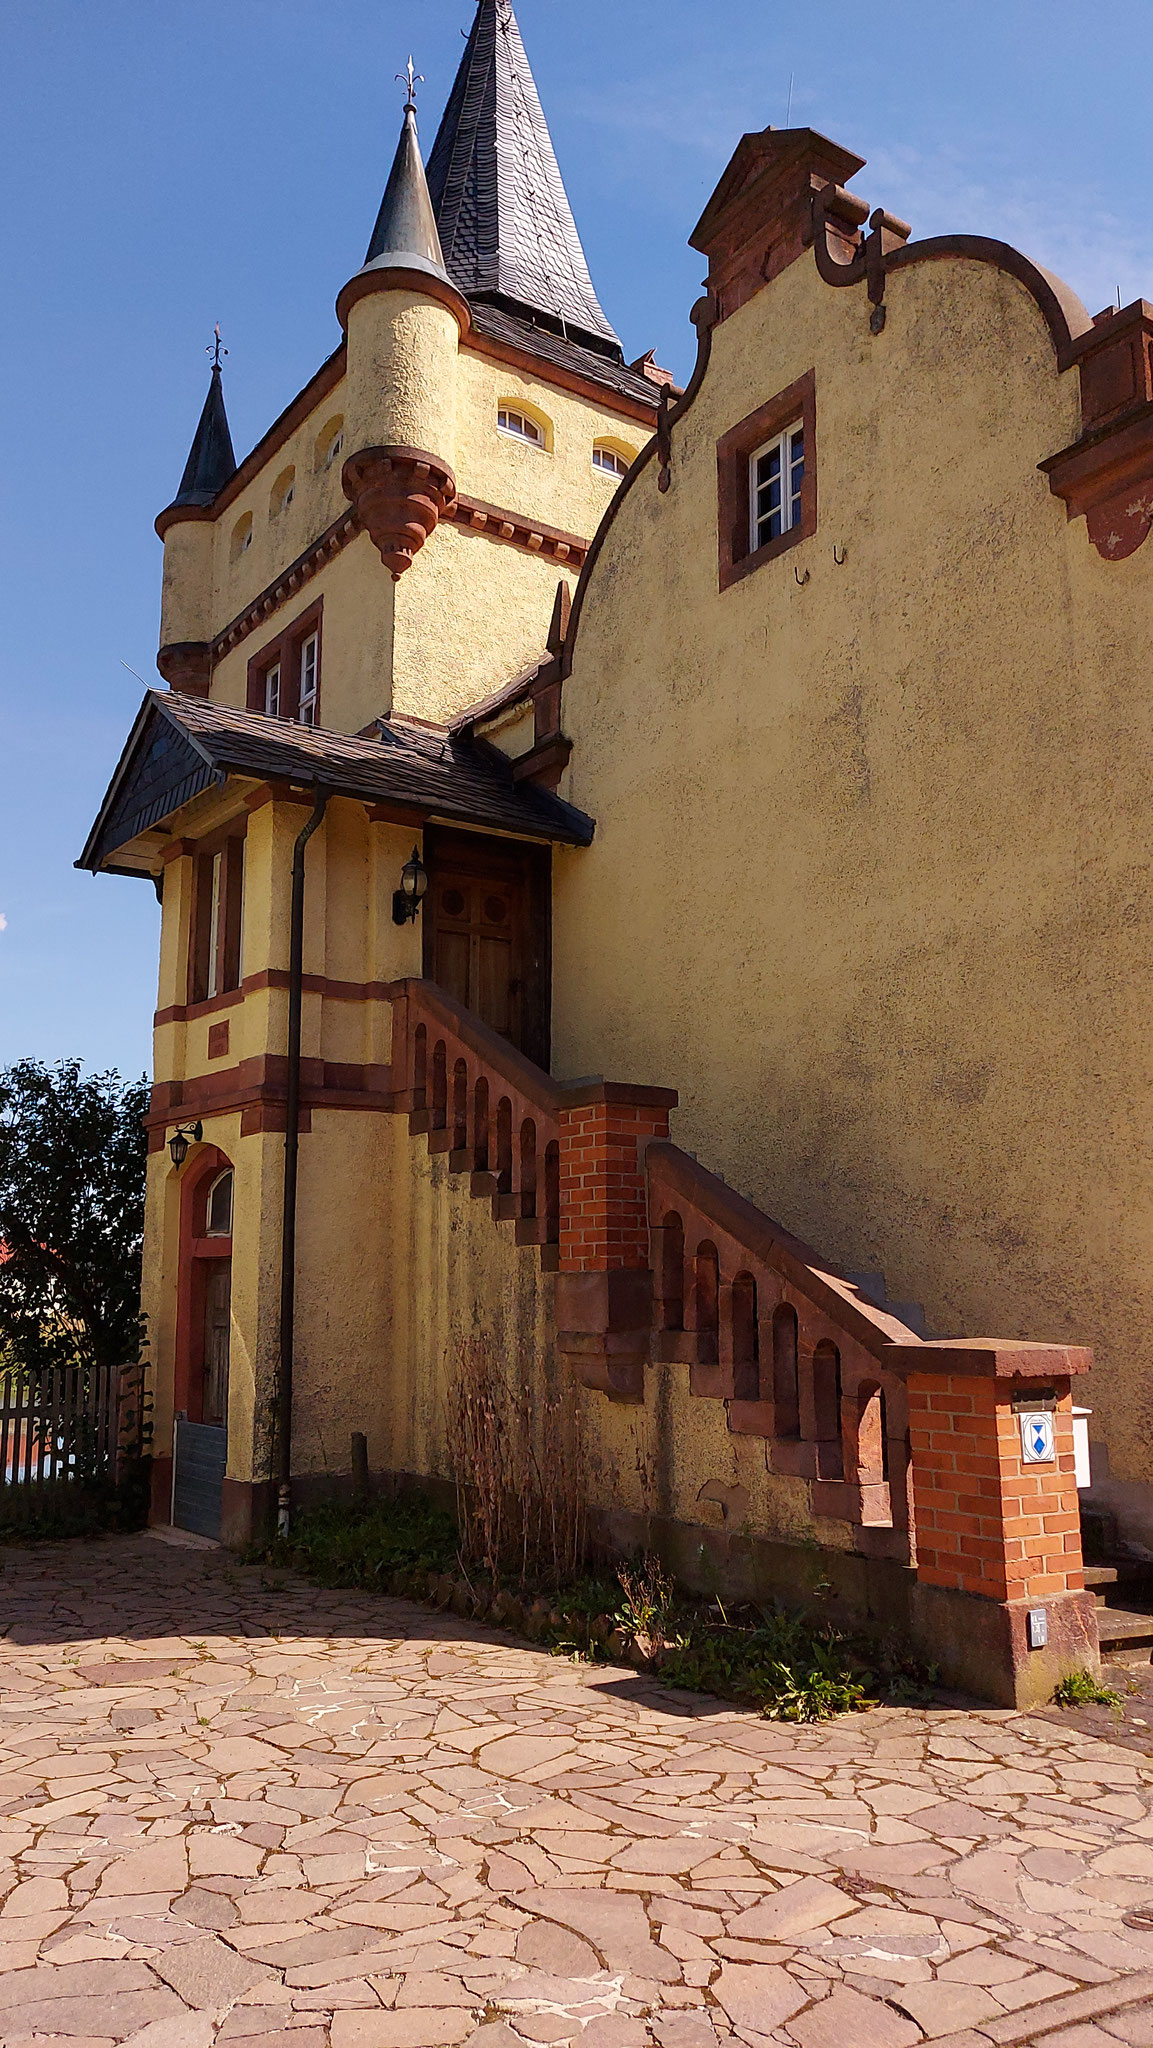 Minischlossvilla aus dem 19. Jahrhundert